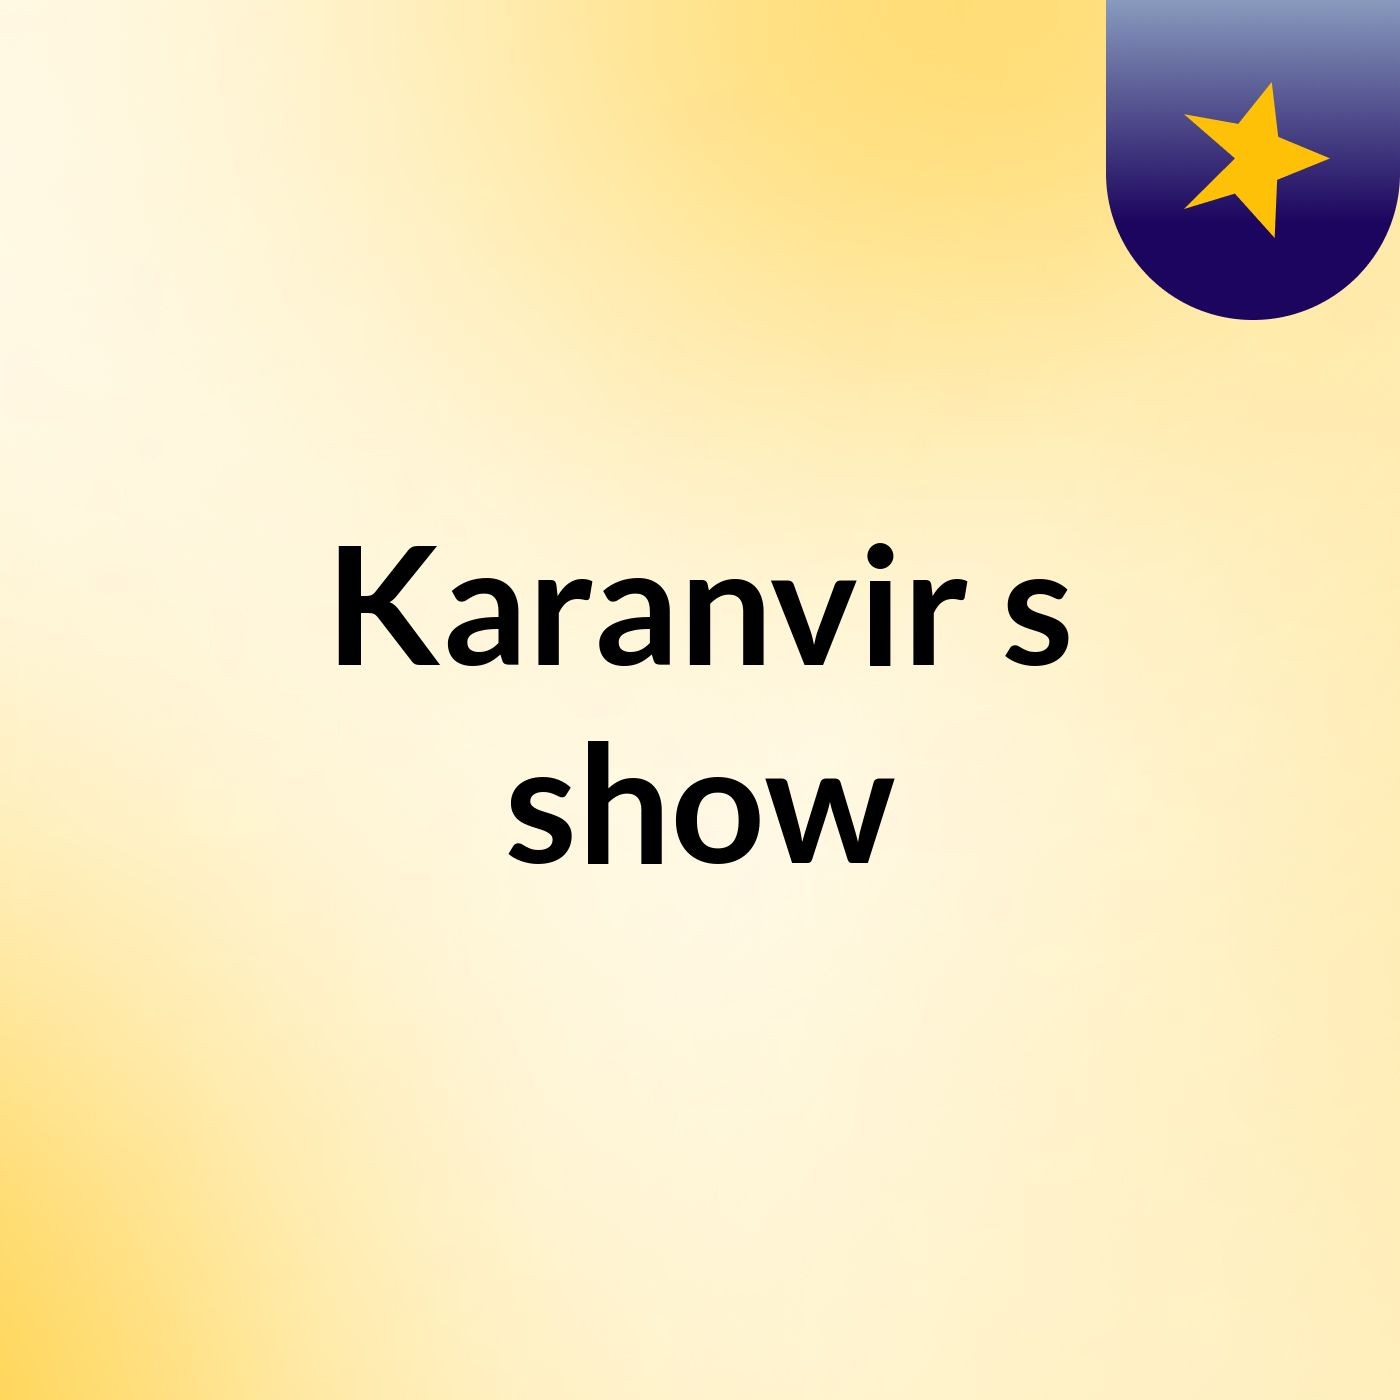 Karanvir's show